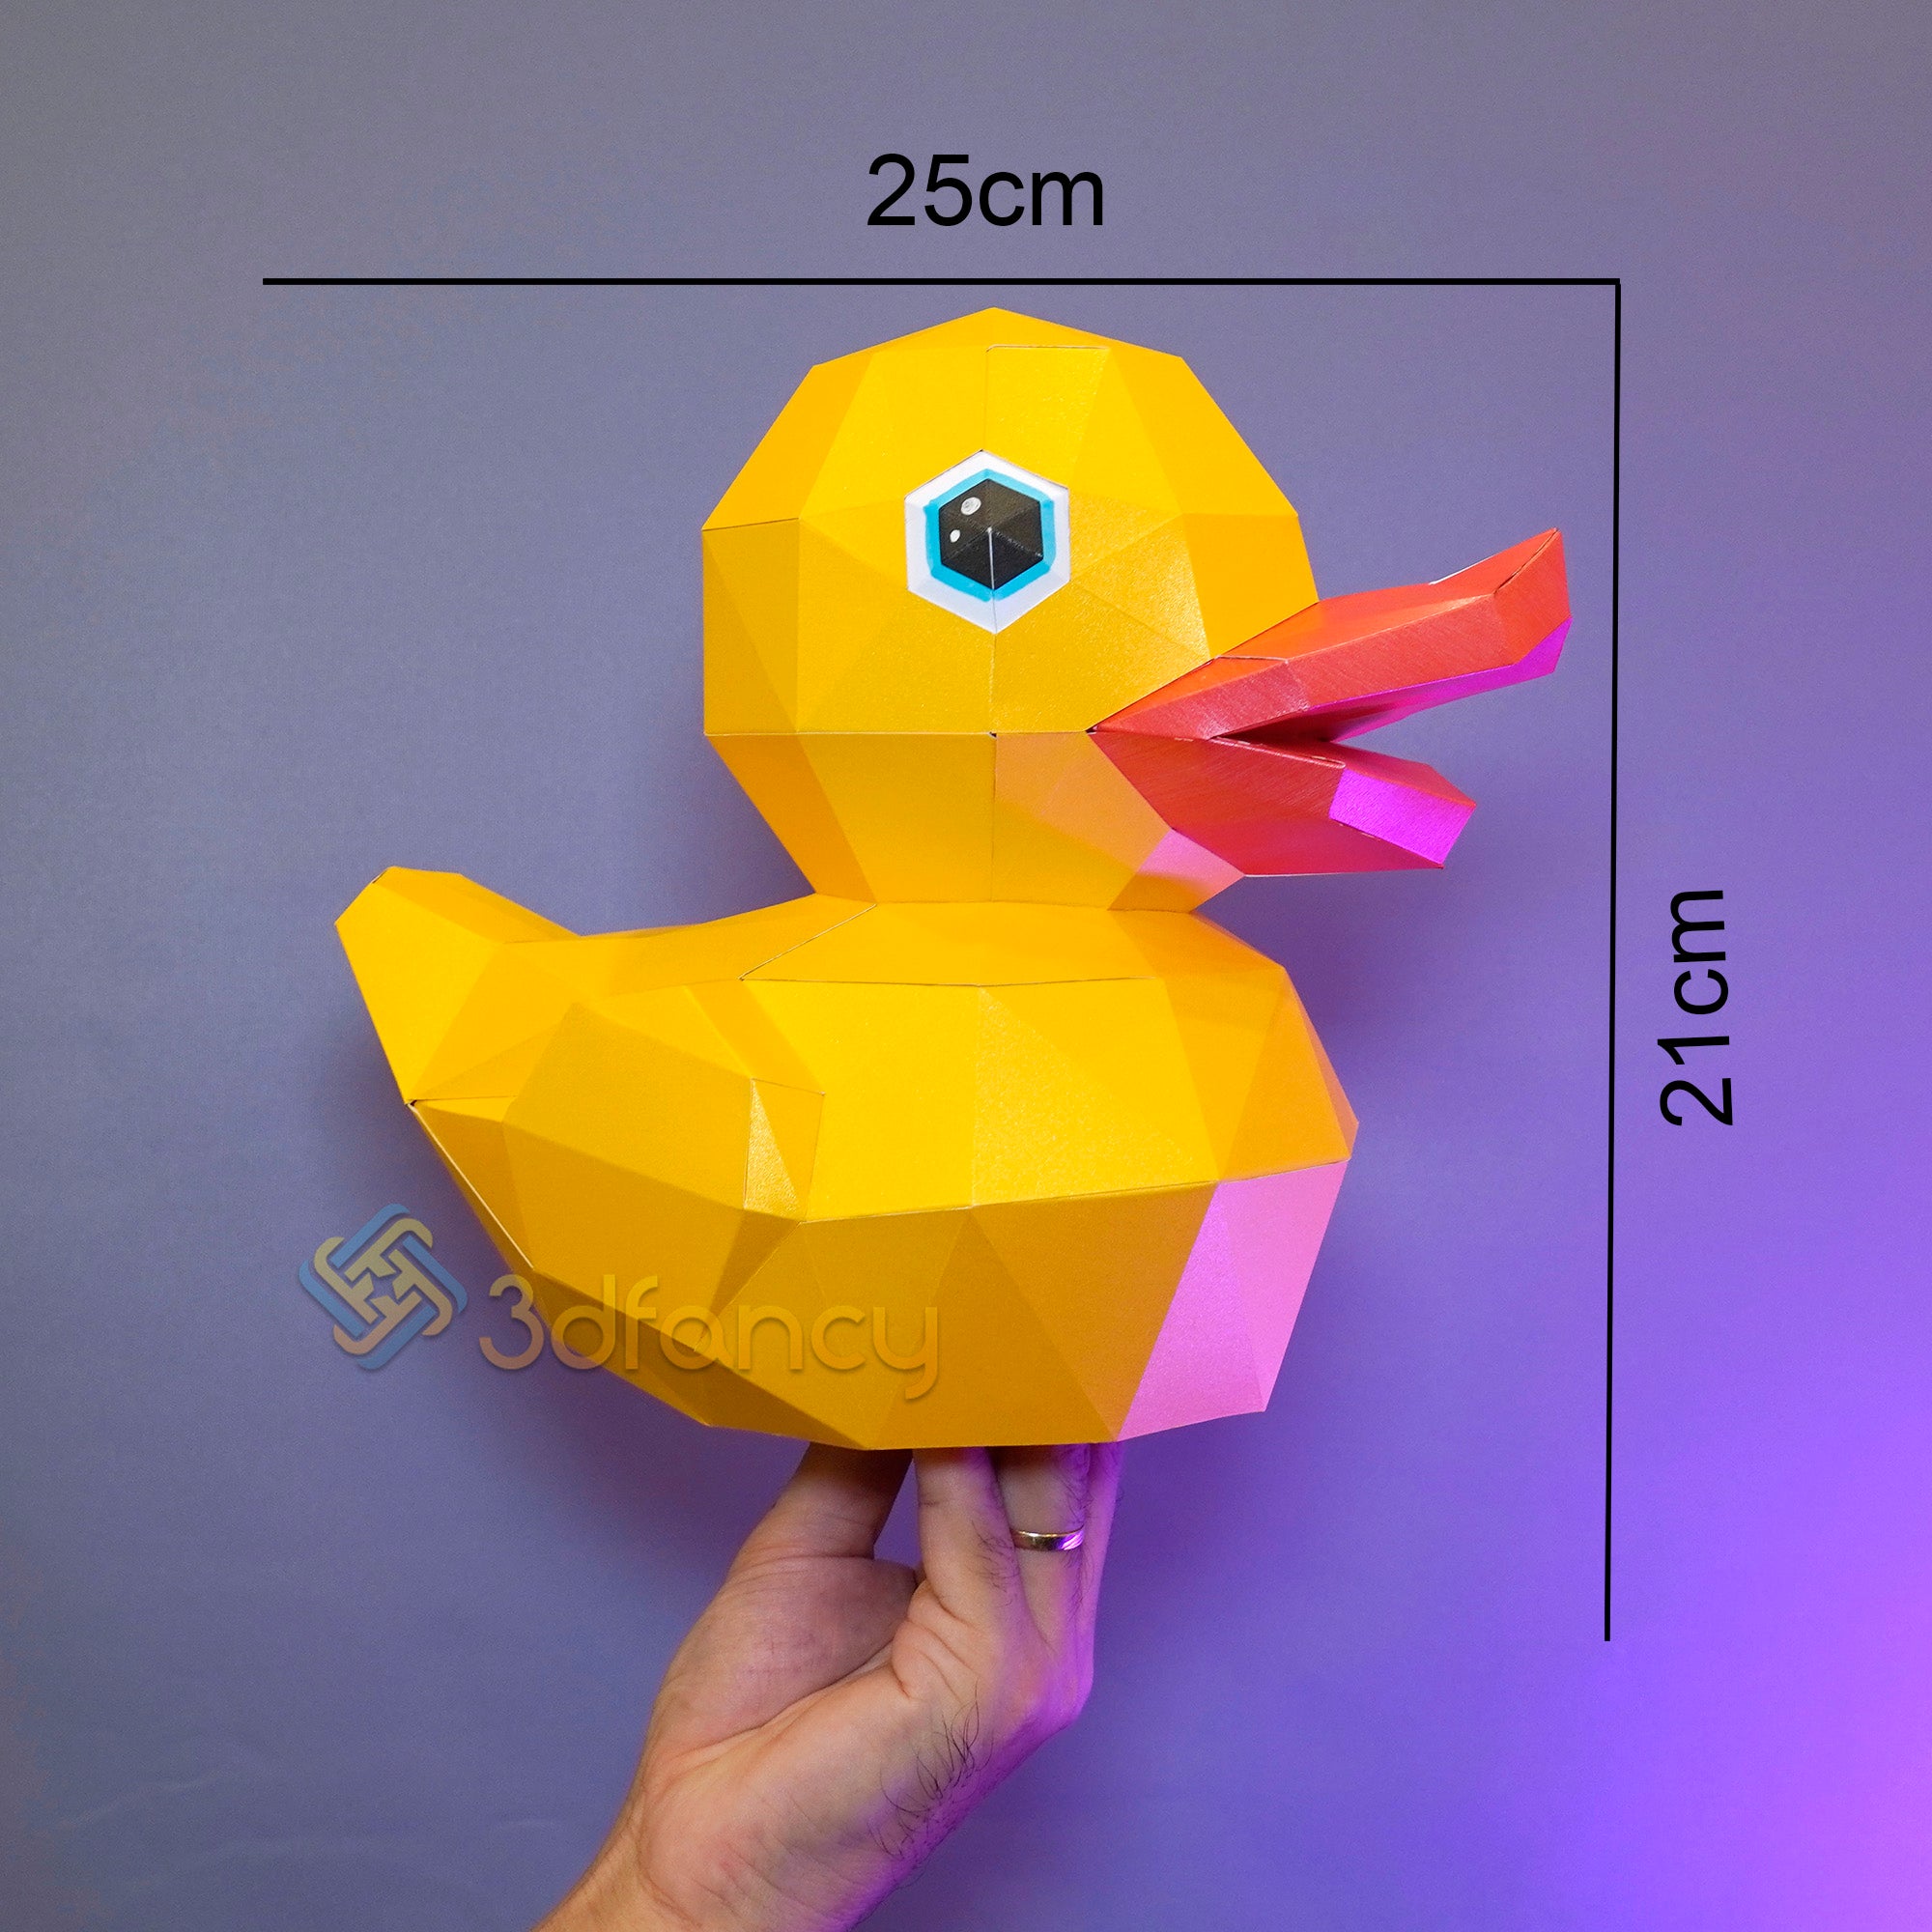 3-D Paper Duck Project - Homeschool Companion